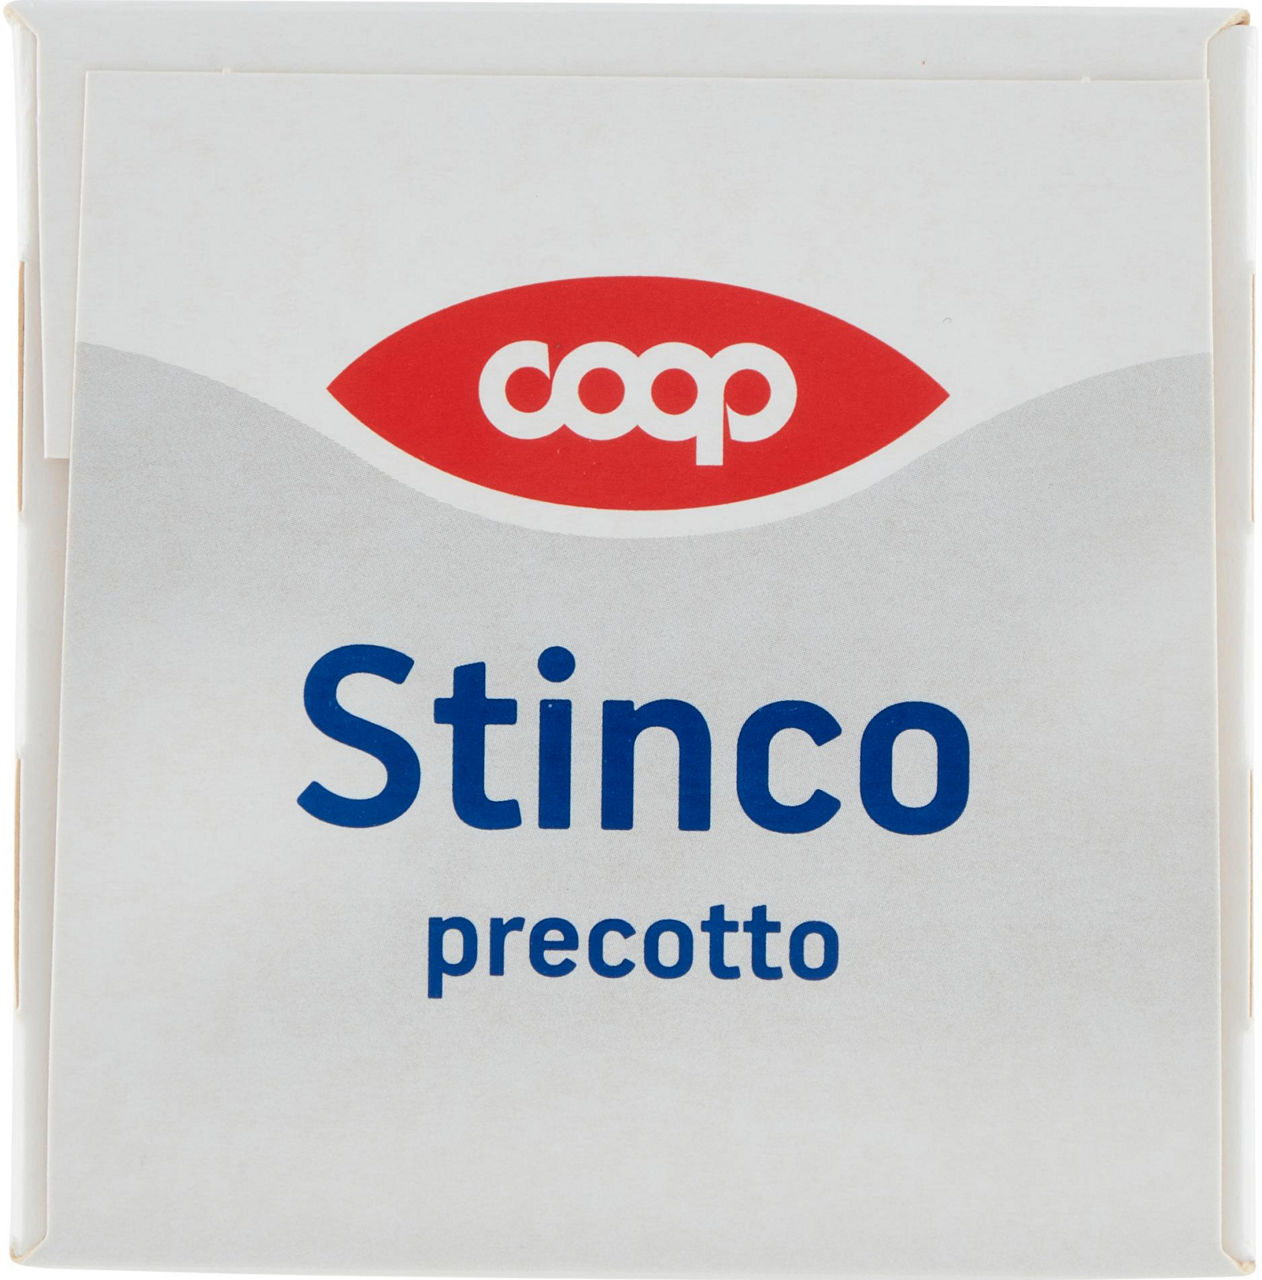 STINCO PRECOTTO COOP ASTUCCIO GR 650 - 4